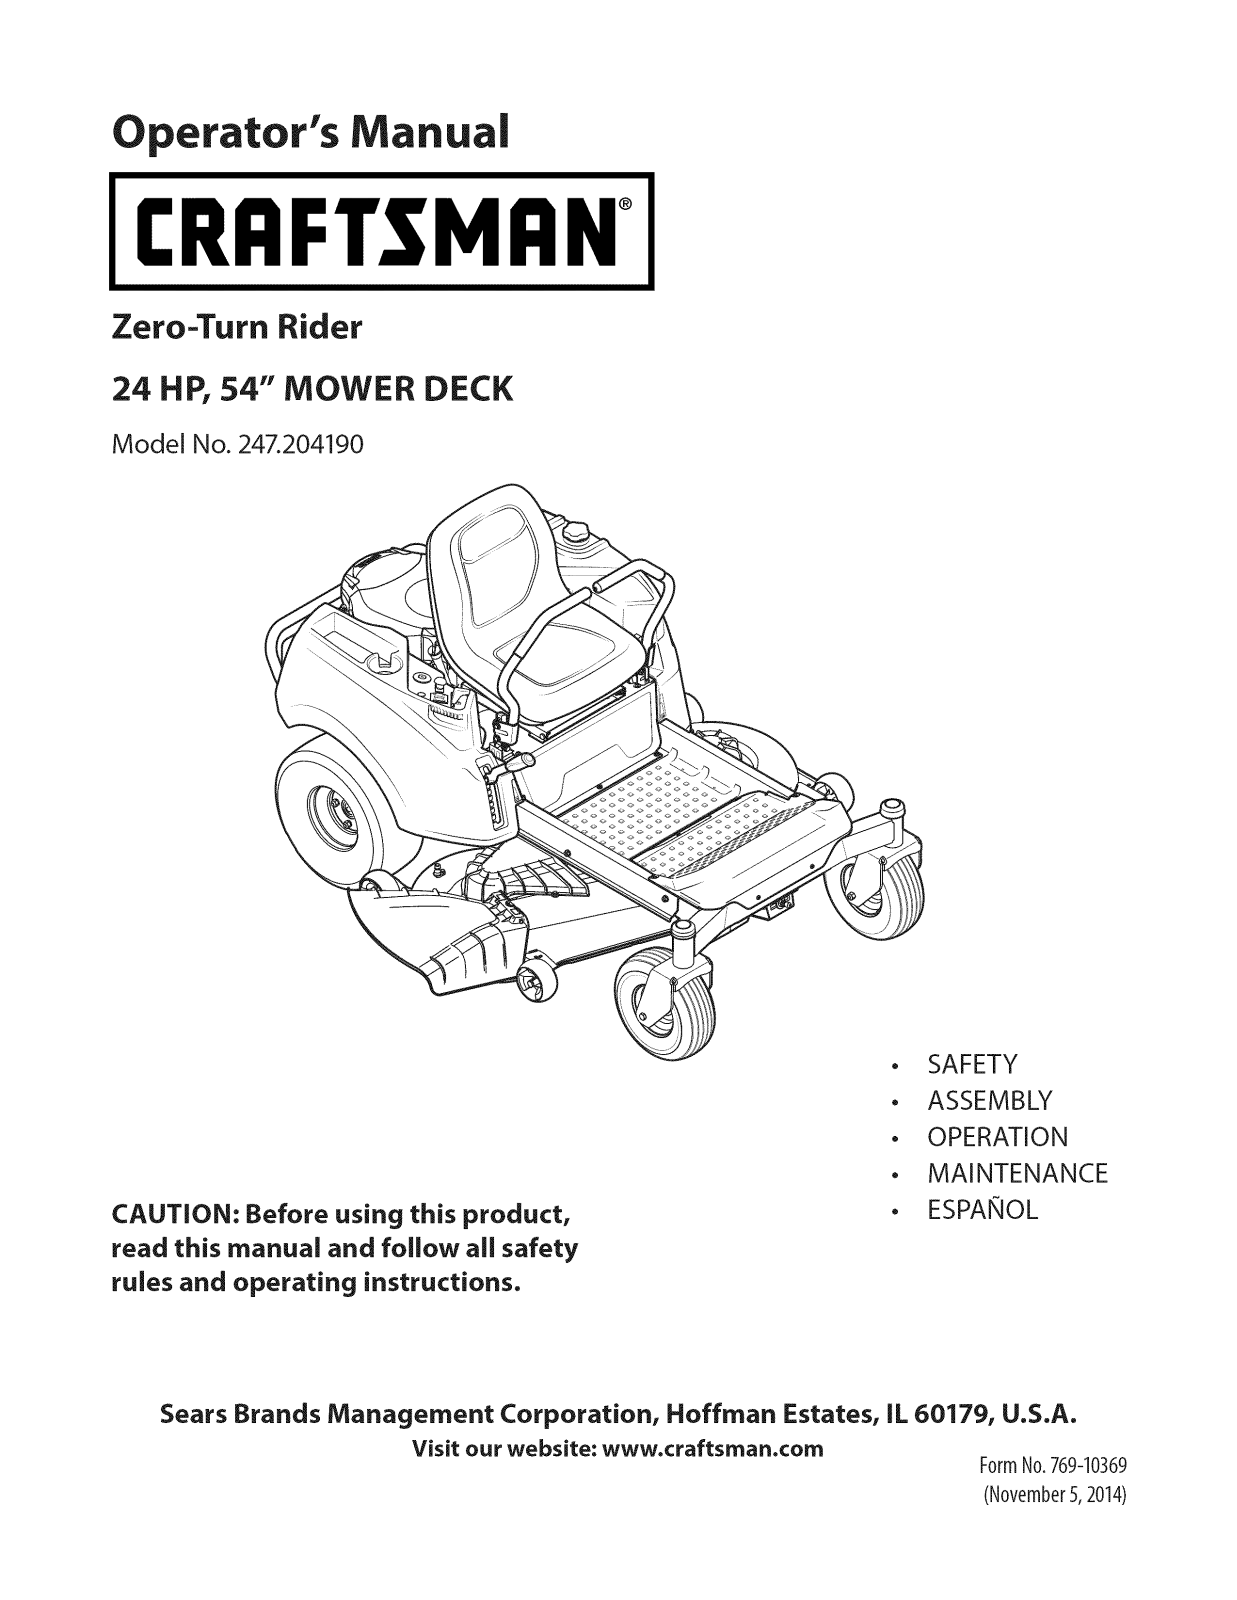 Craftsman 247204190 Owner’s Manual